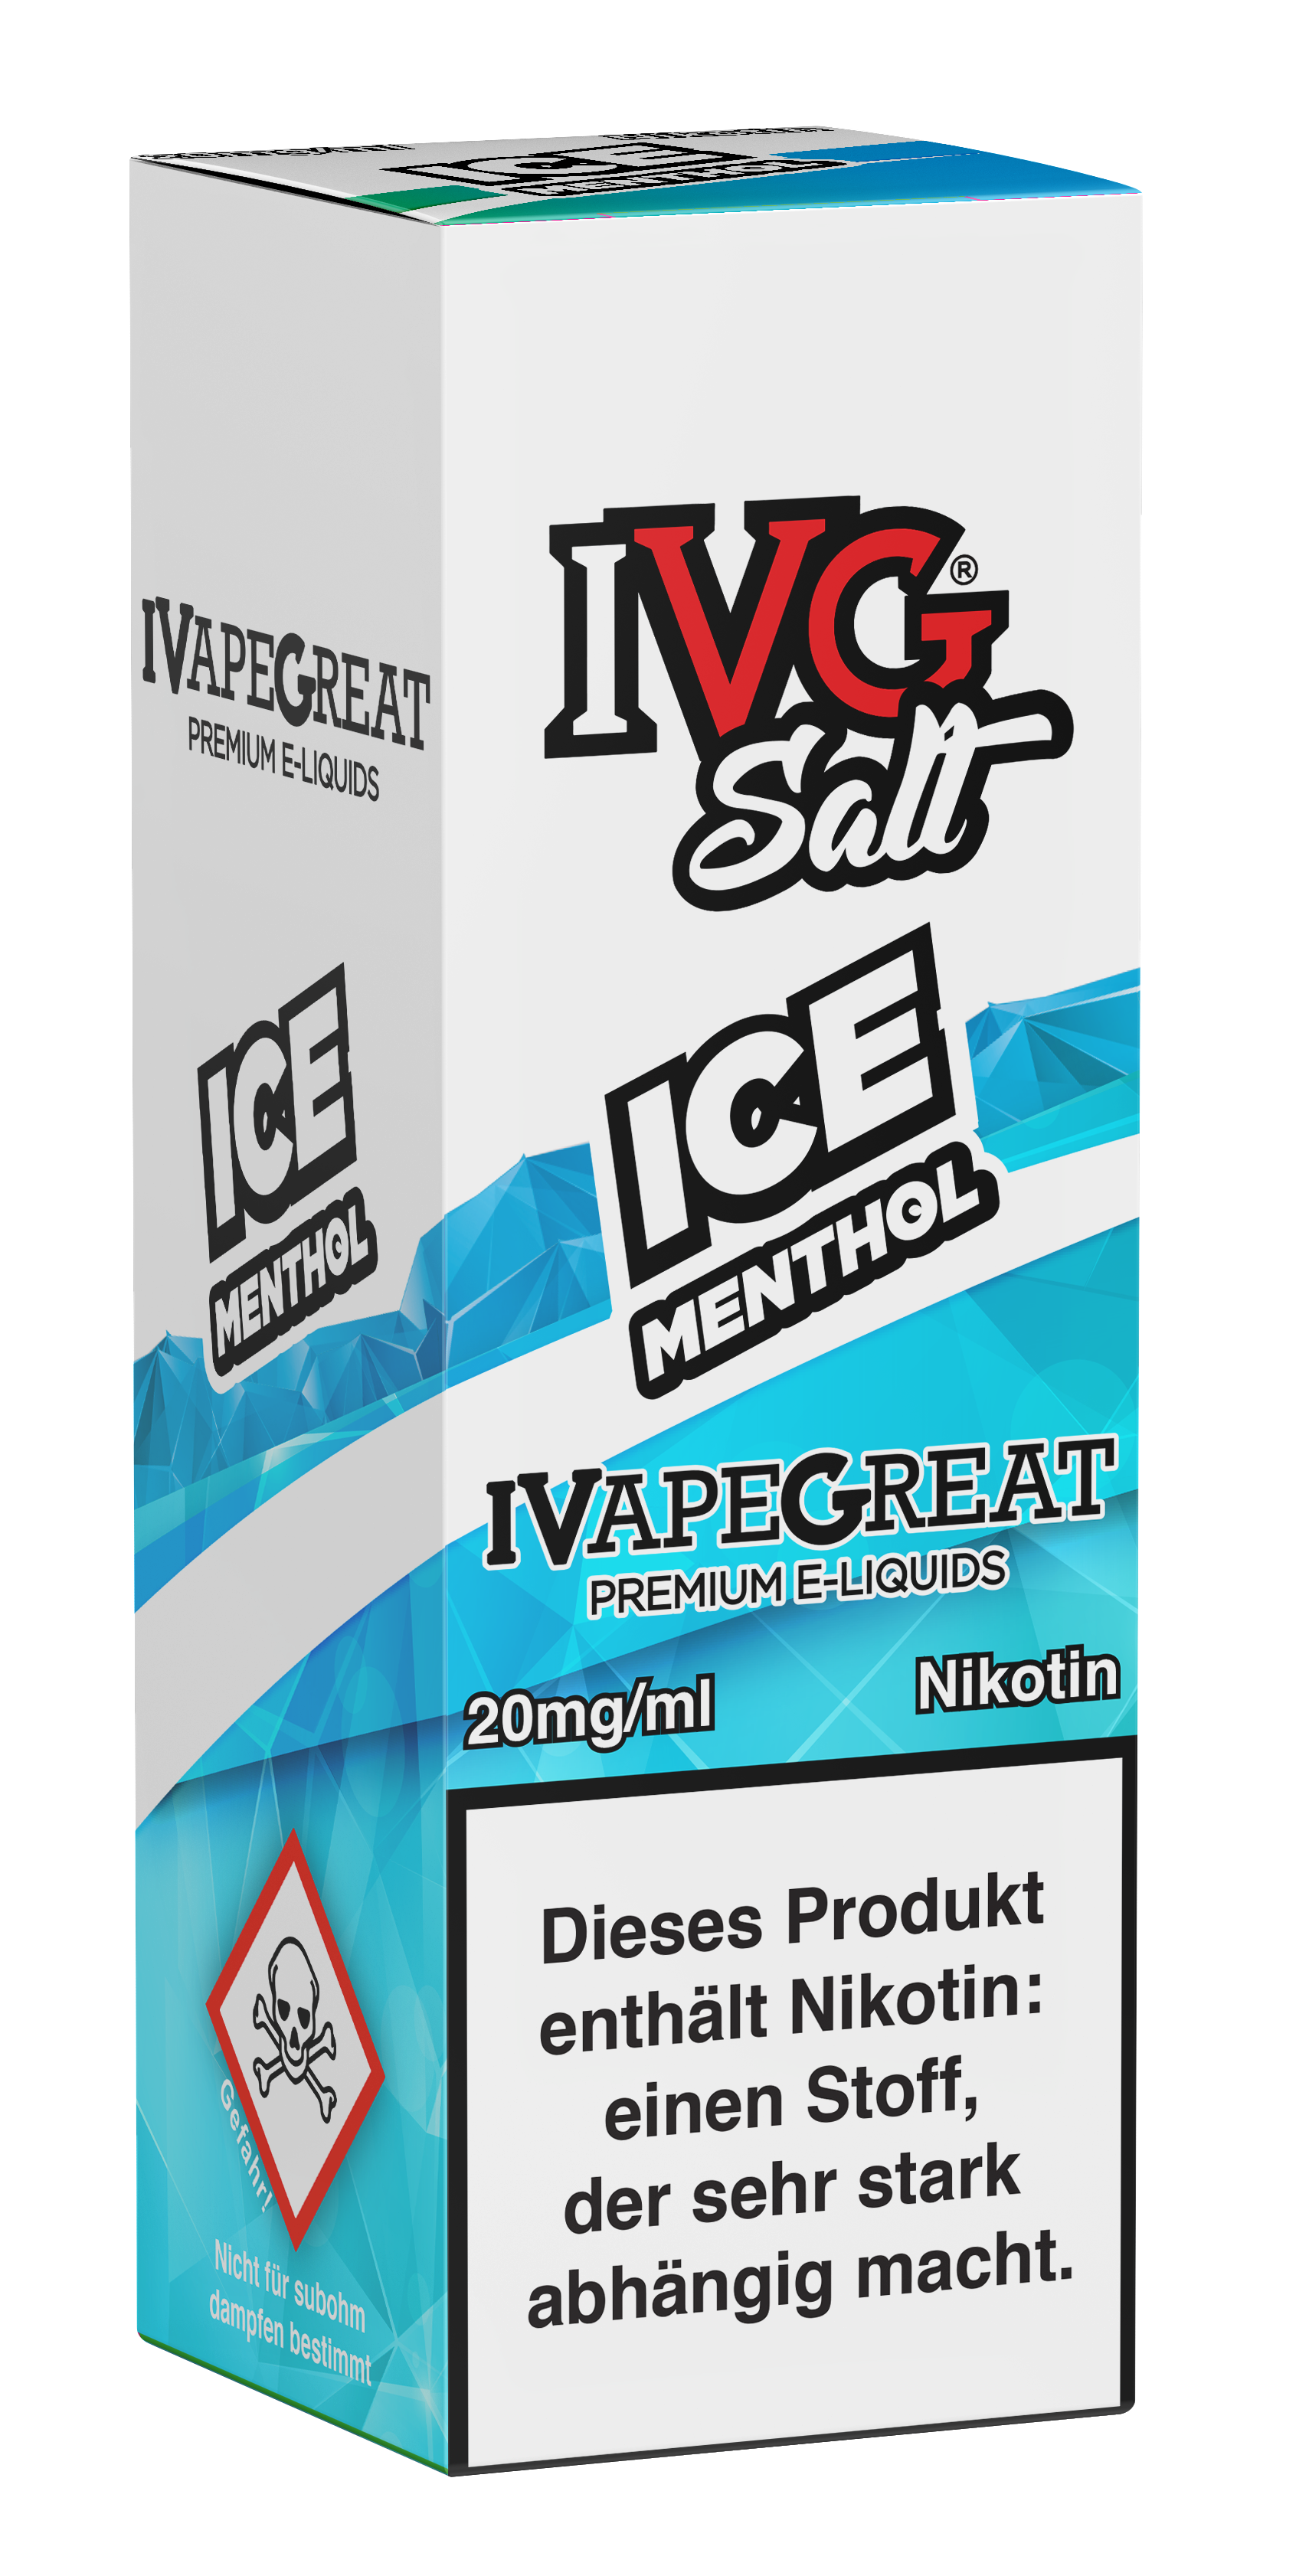 IVG Nikotinsalz 10ml Liquid - Menthol Ice